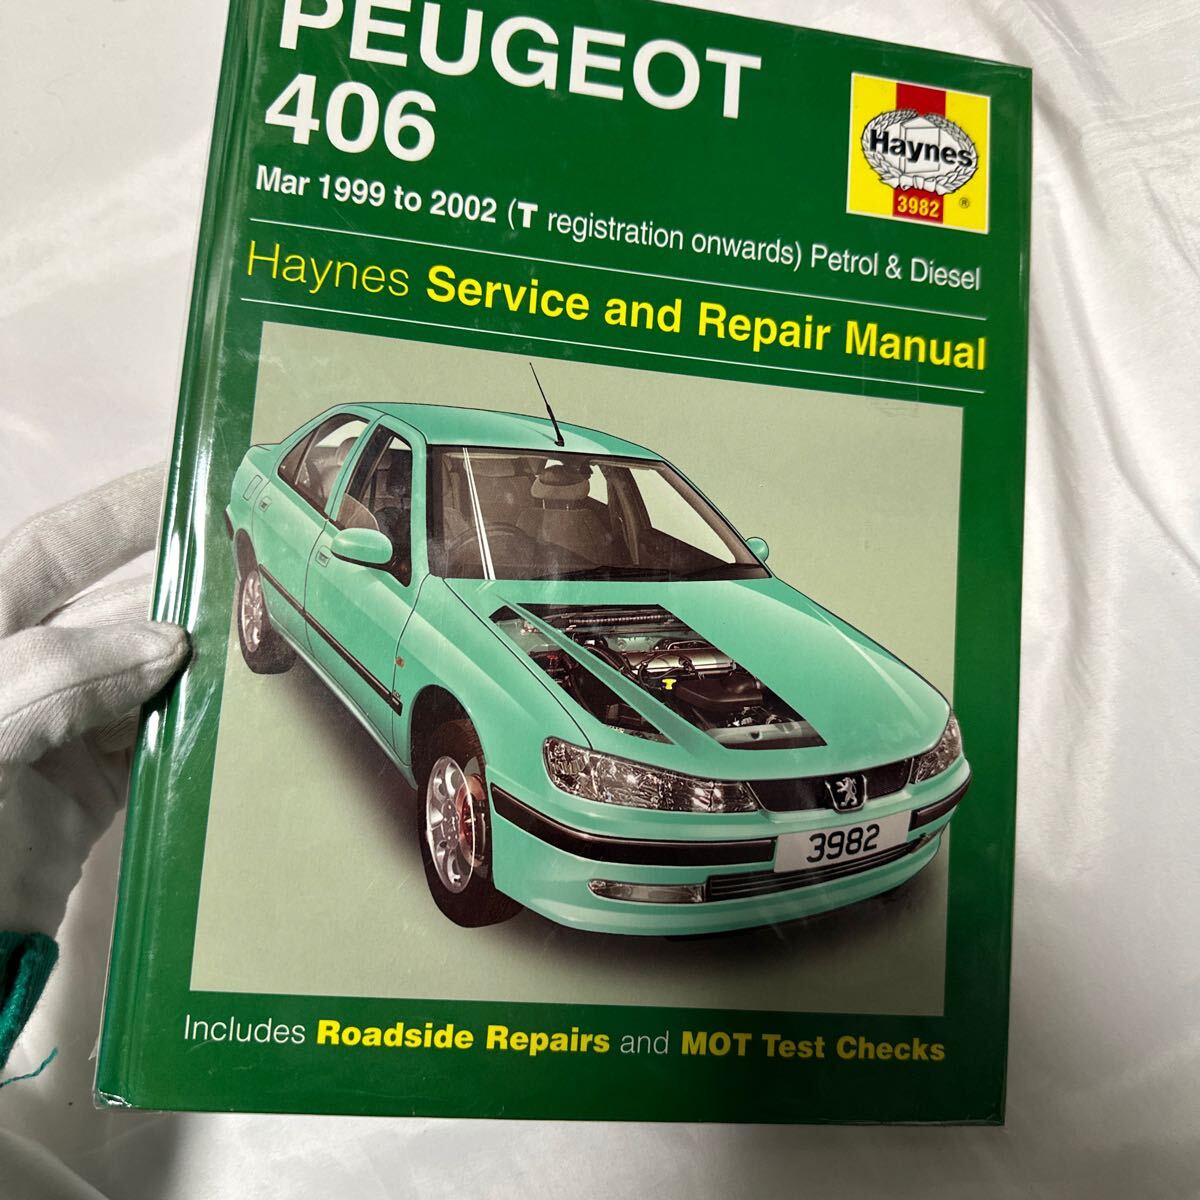 PEUGEOT406 ヘインズHaynesプジョー/ガソリン1999-2002サービス&リペアマニュアル配線図付き整備書 整備本 manual